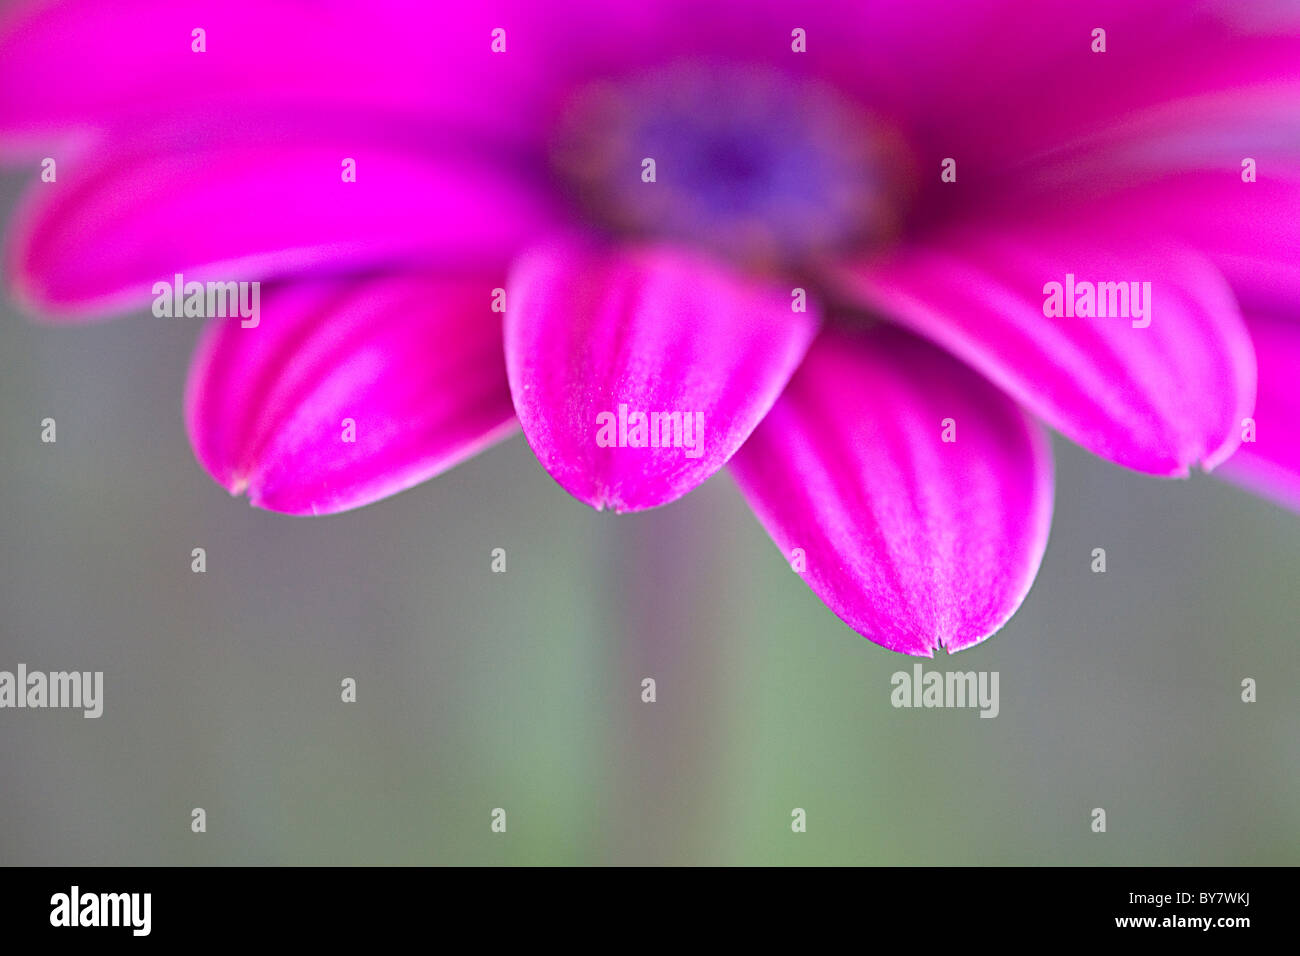 Dark pink African daisy Stock Photo